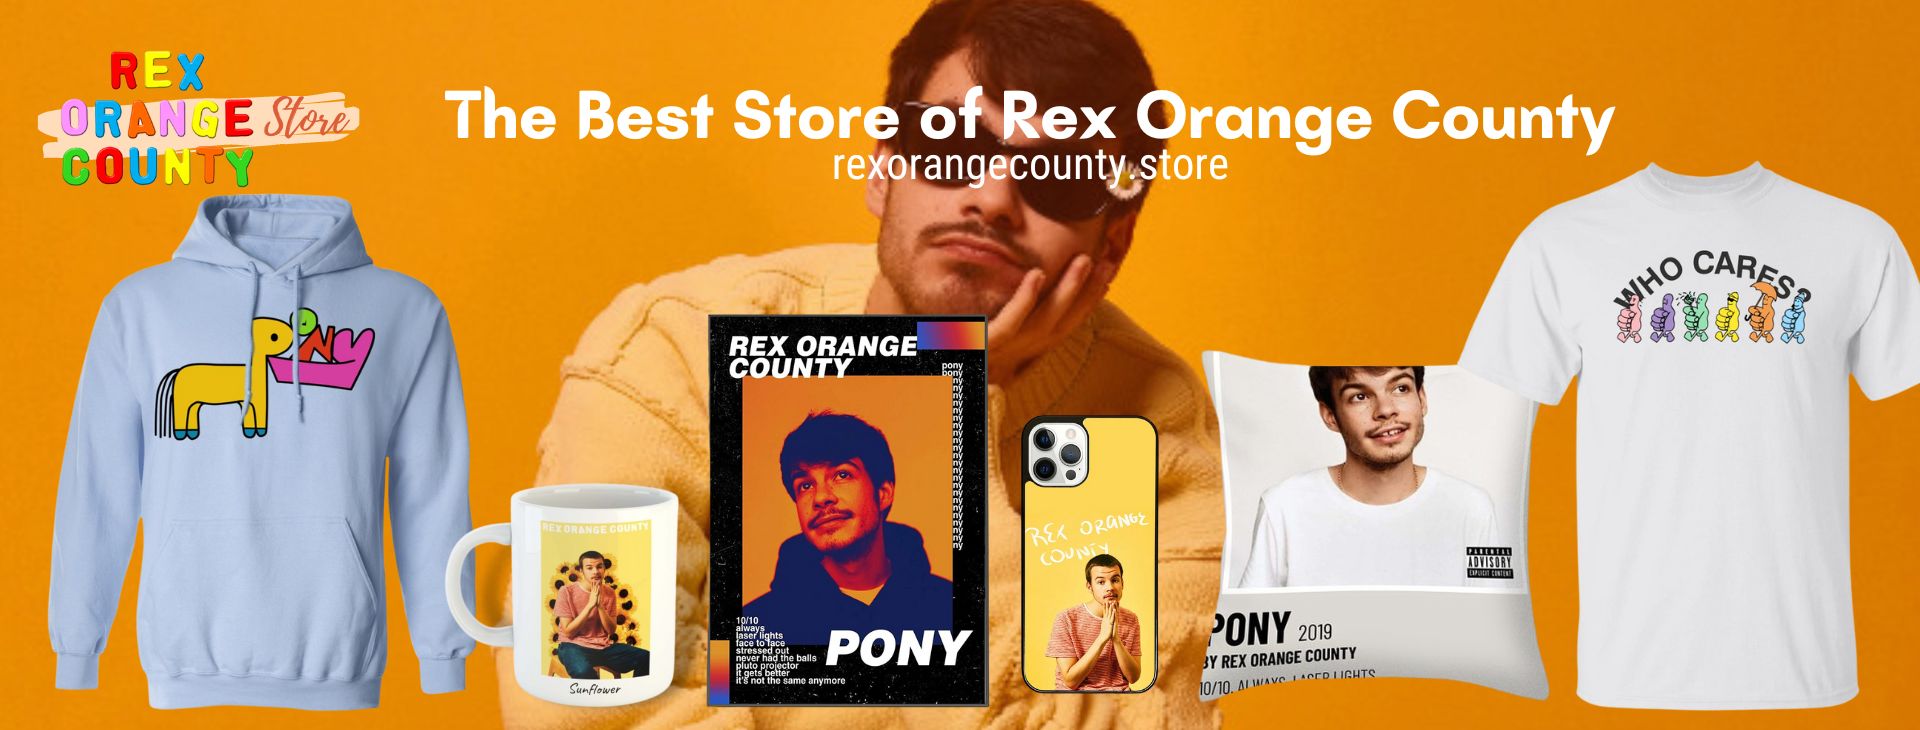 Review: Rex Orange County's “Pony”